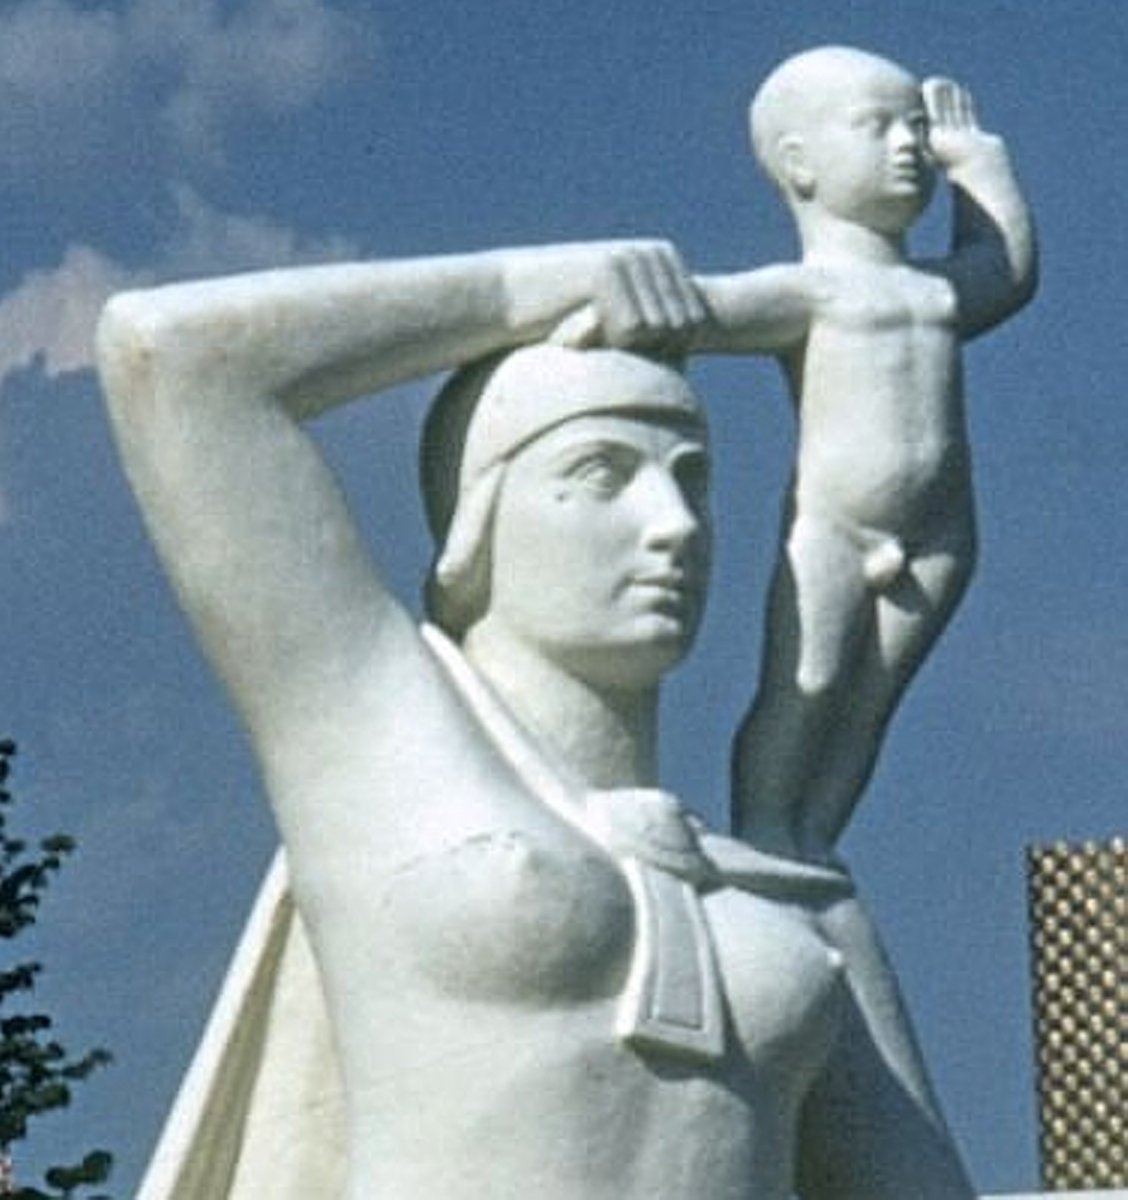 Gudda with nipples in 1939